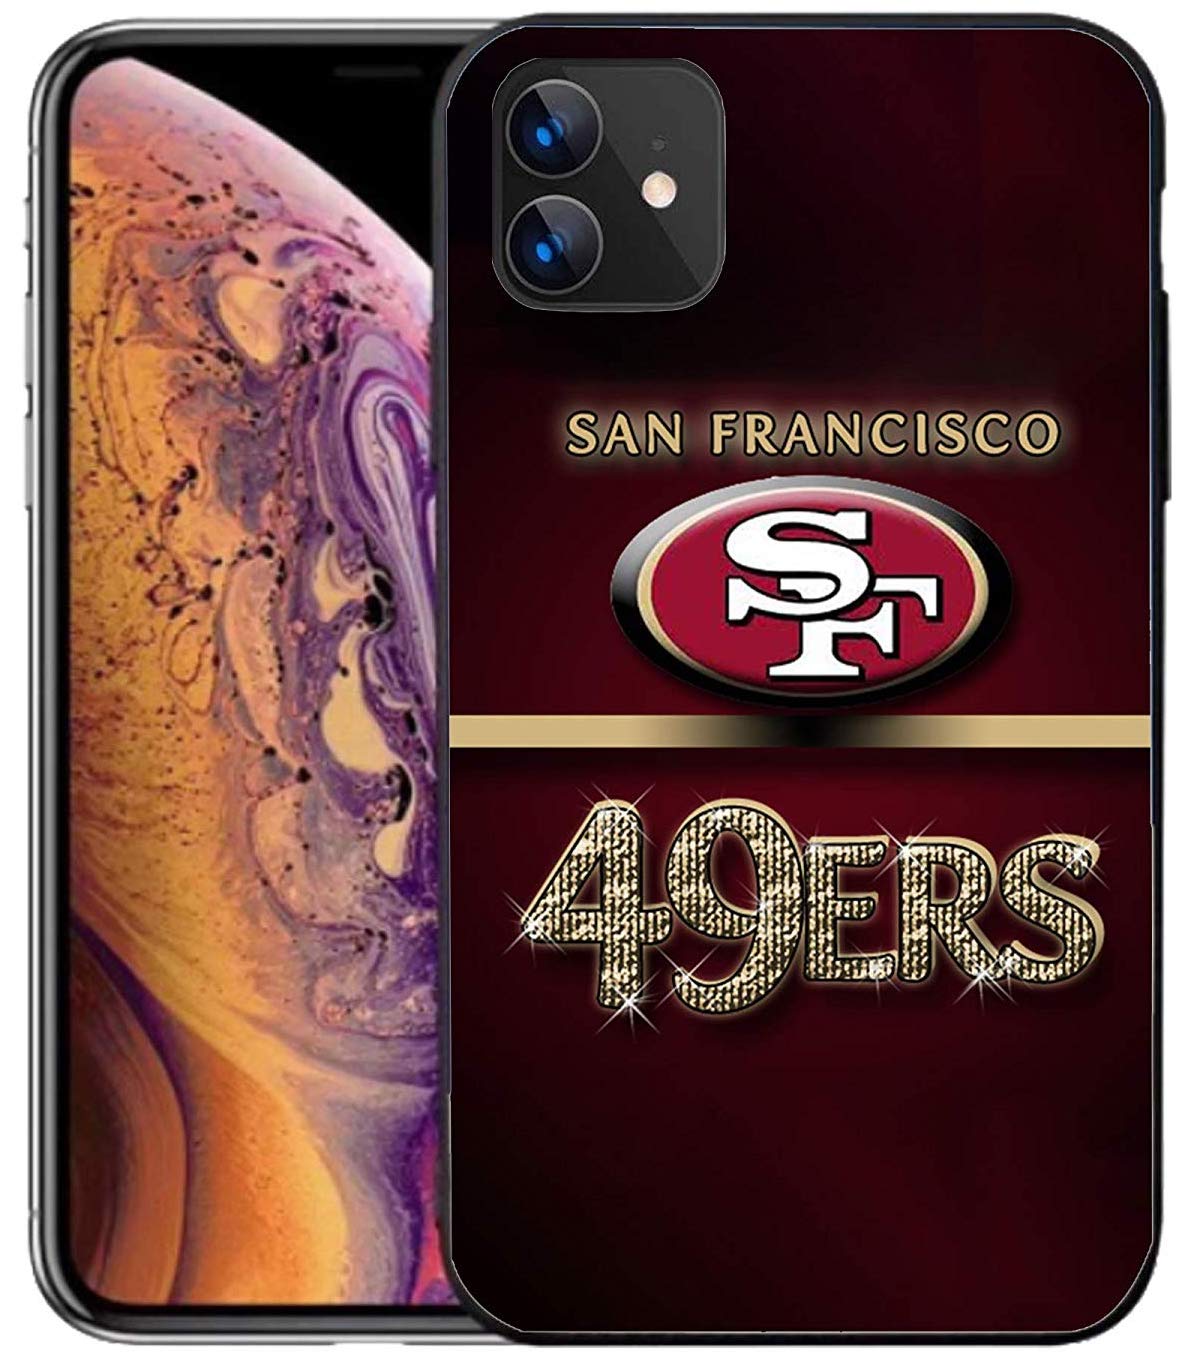 49ers iPhone case